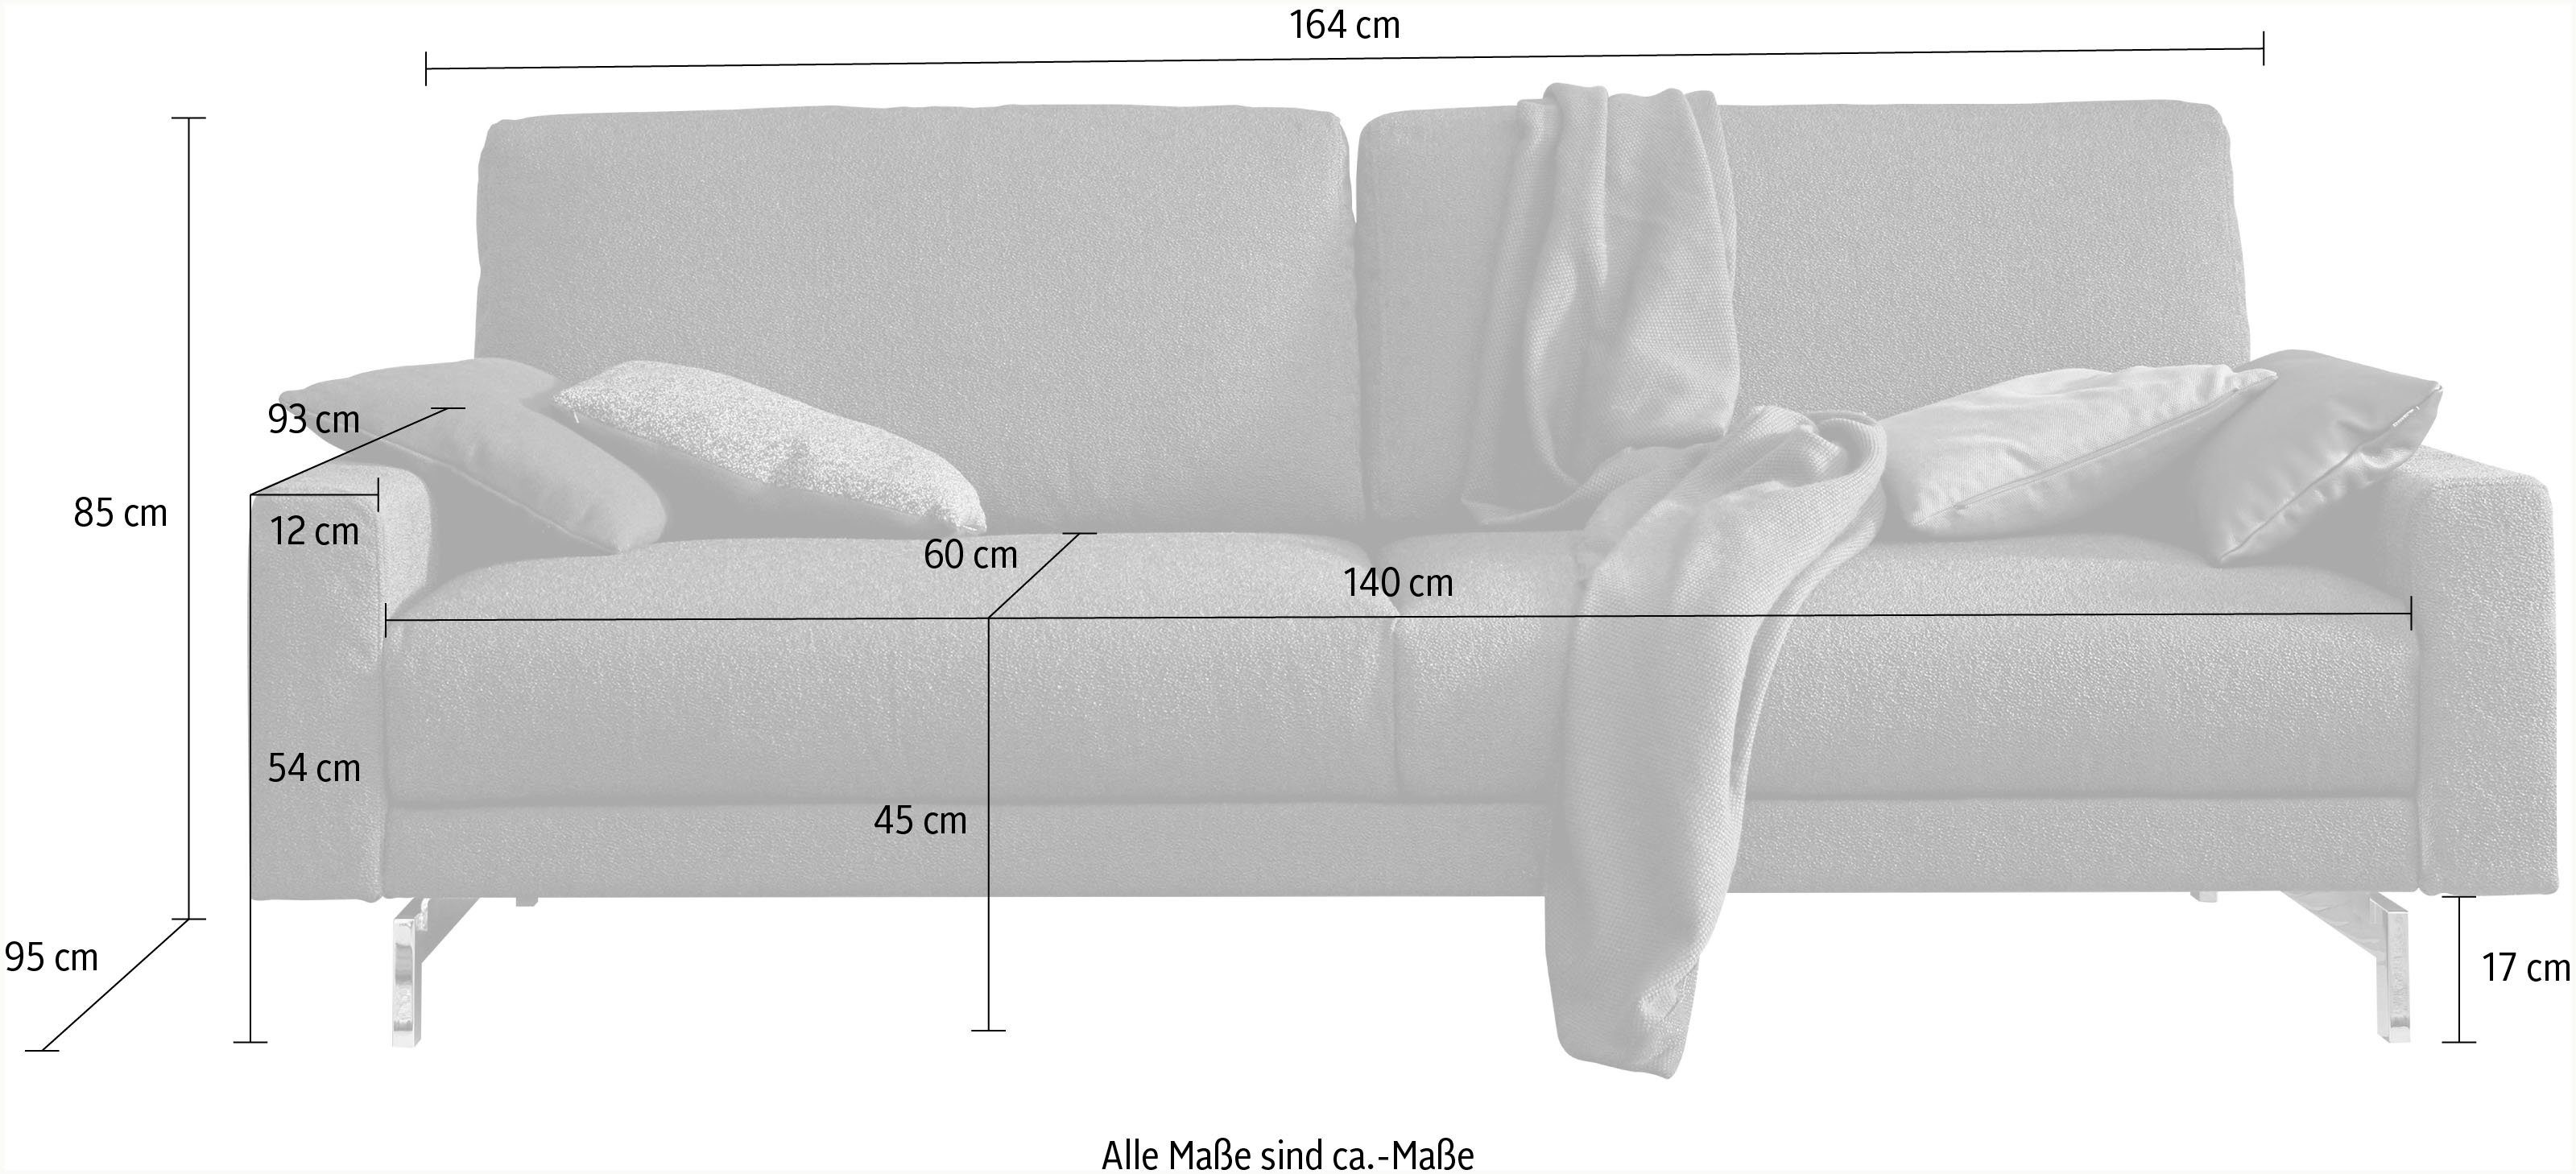 chromfarben 2-Sitzer Fuß sofa niedrig, 164 Armlehne hülsta cm Breite hs.450, glänzend,